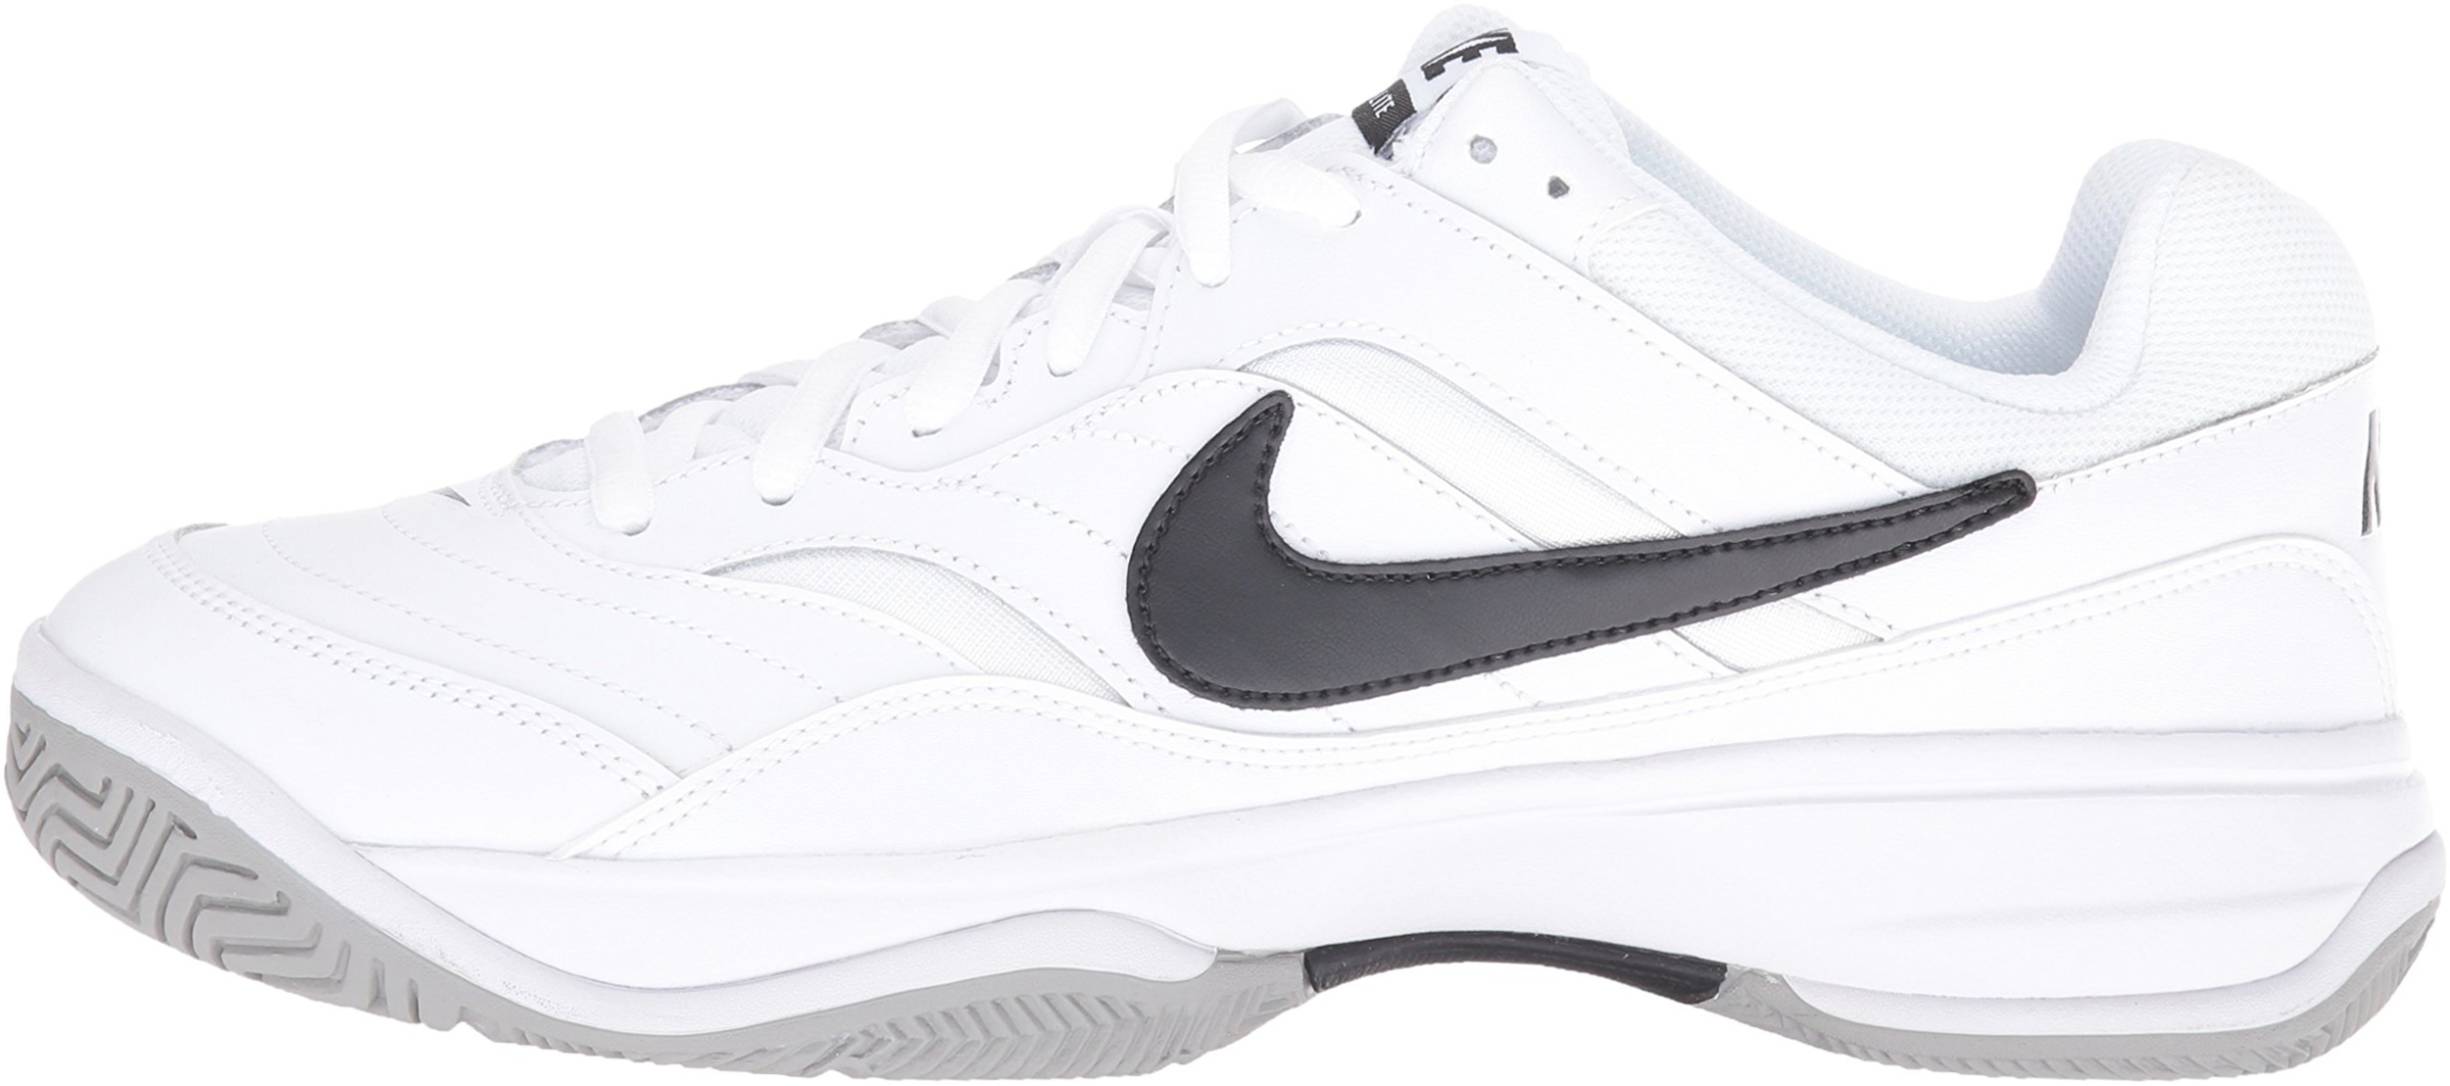 nike tennis shoes all white